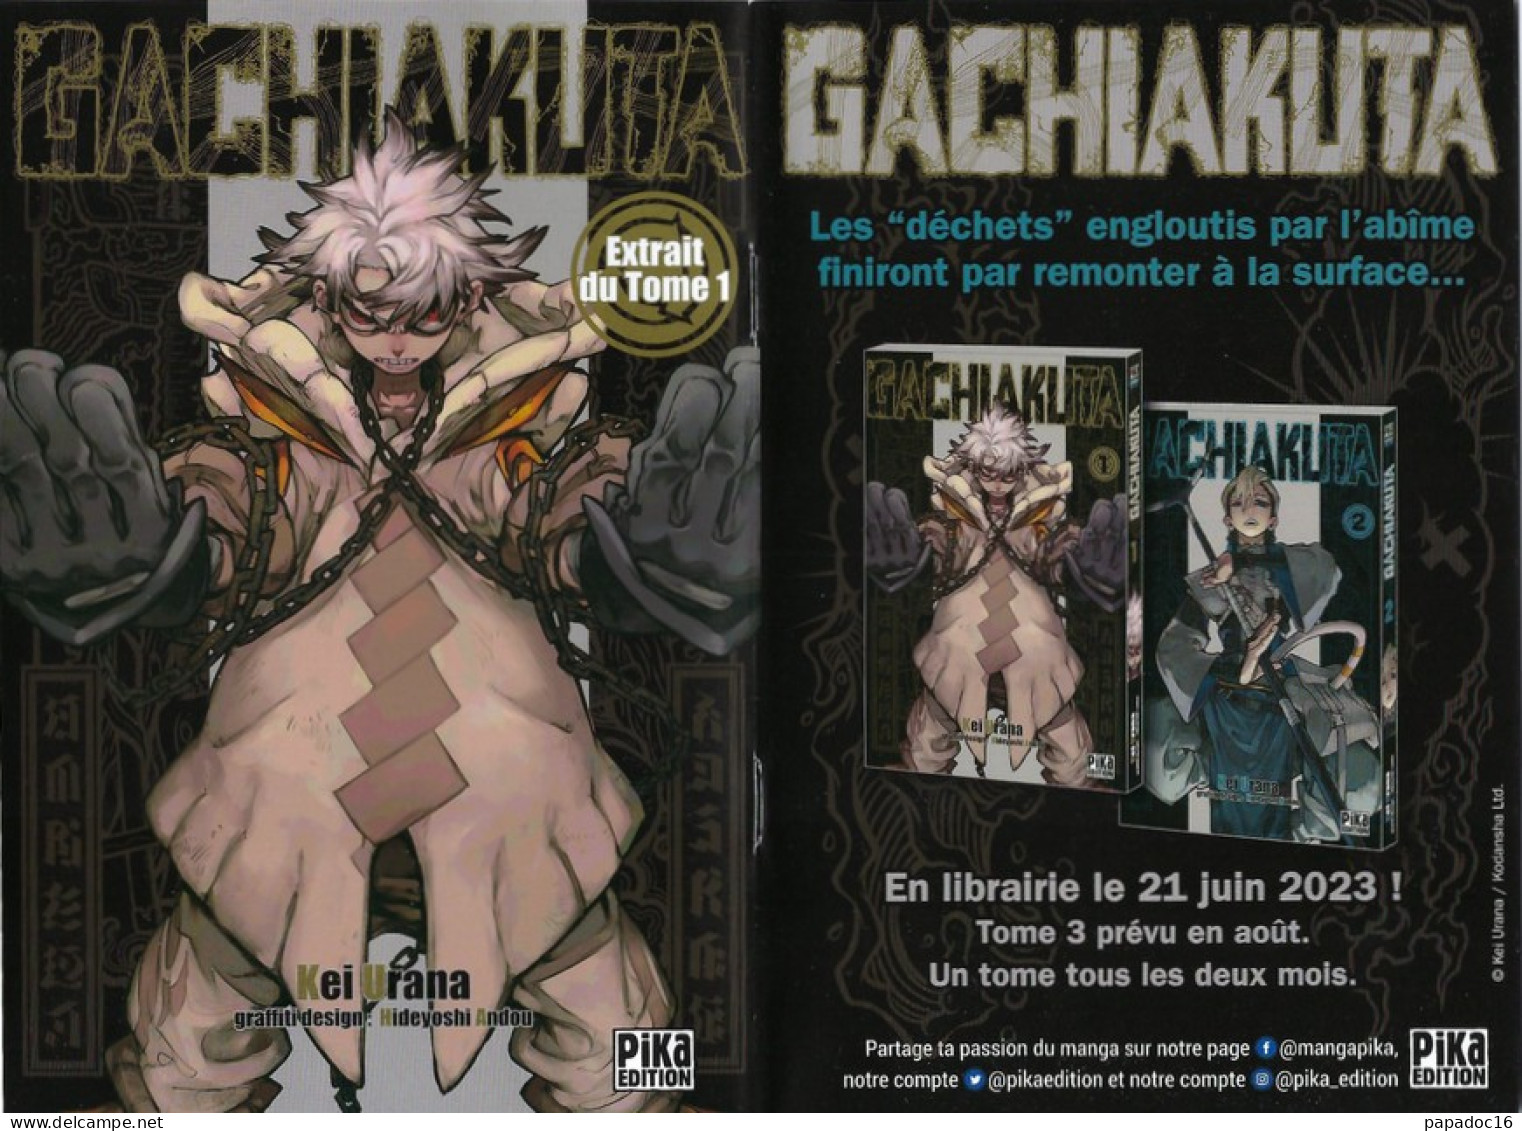 BD - Gachiakuta - Extrait Du Tome 1 - Kei Urana, éd. Pika 2023 - Mangas Versione Francese